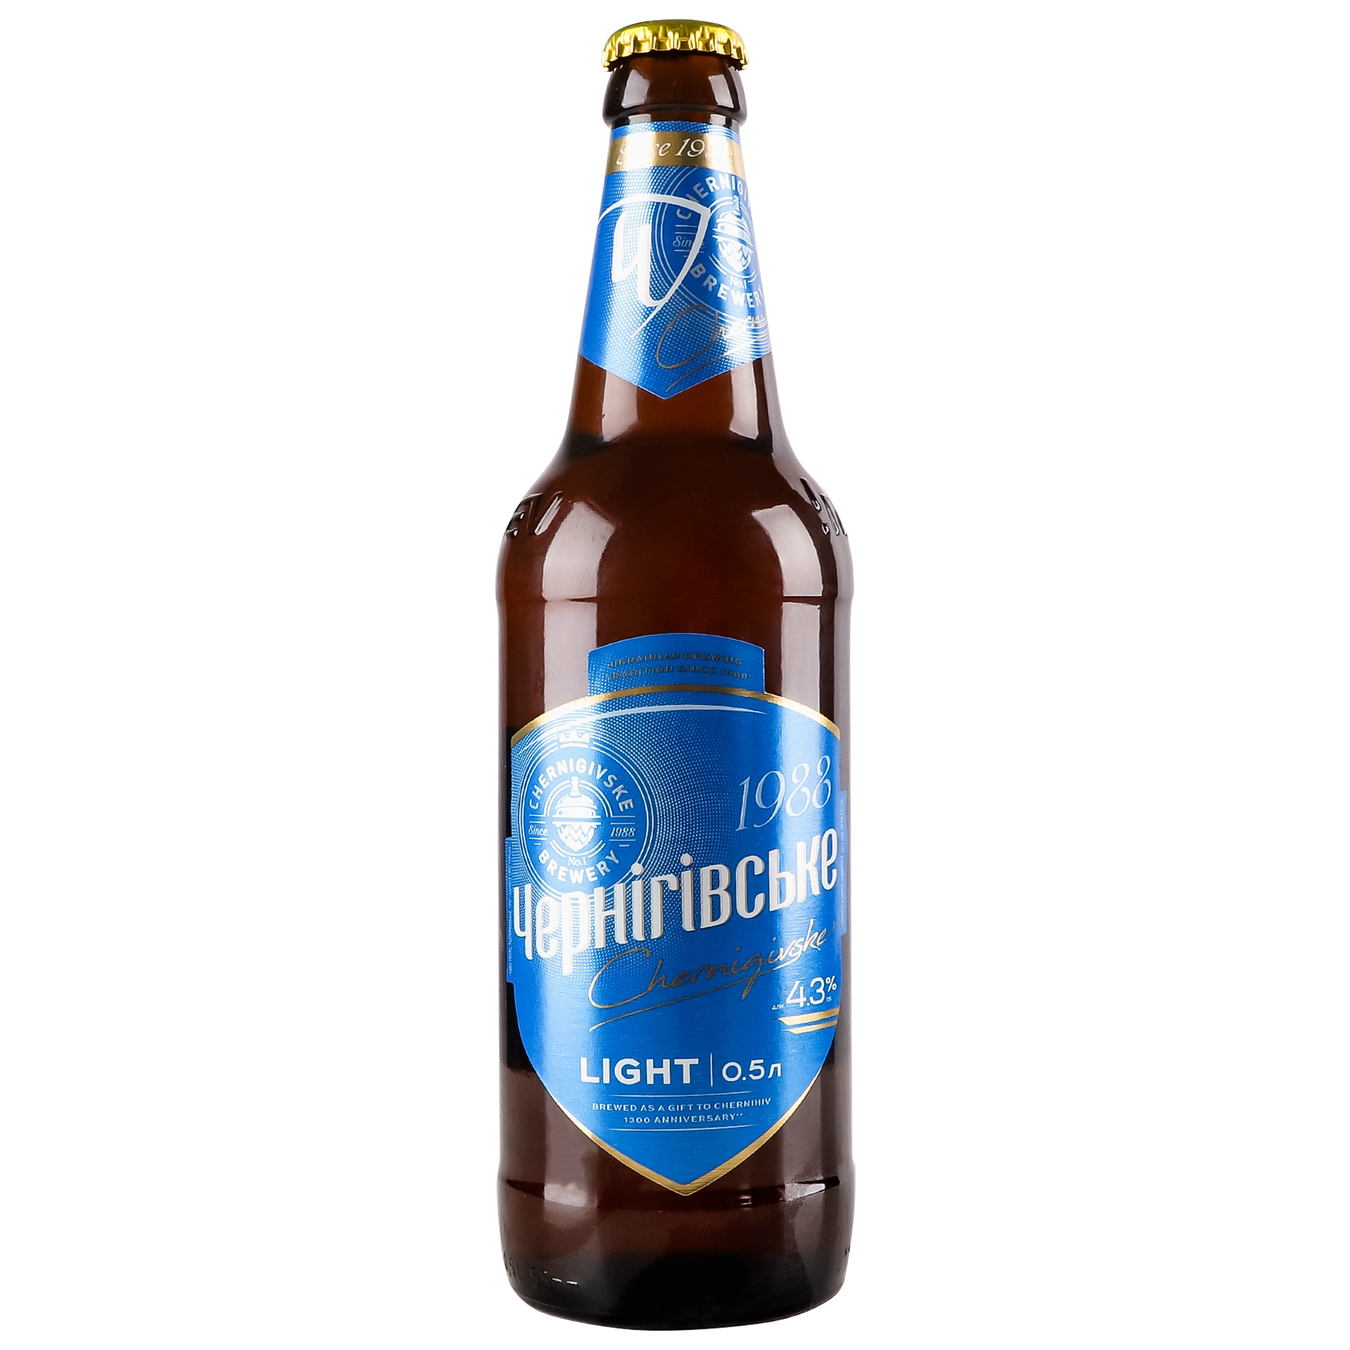 Beer Chernihivske Light 5% 0.5l glass